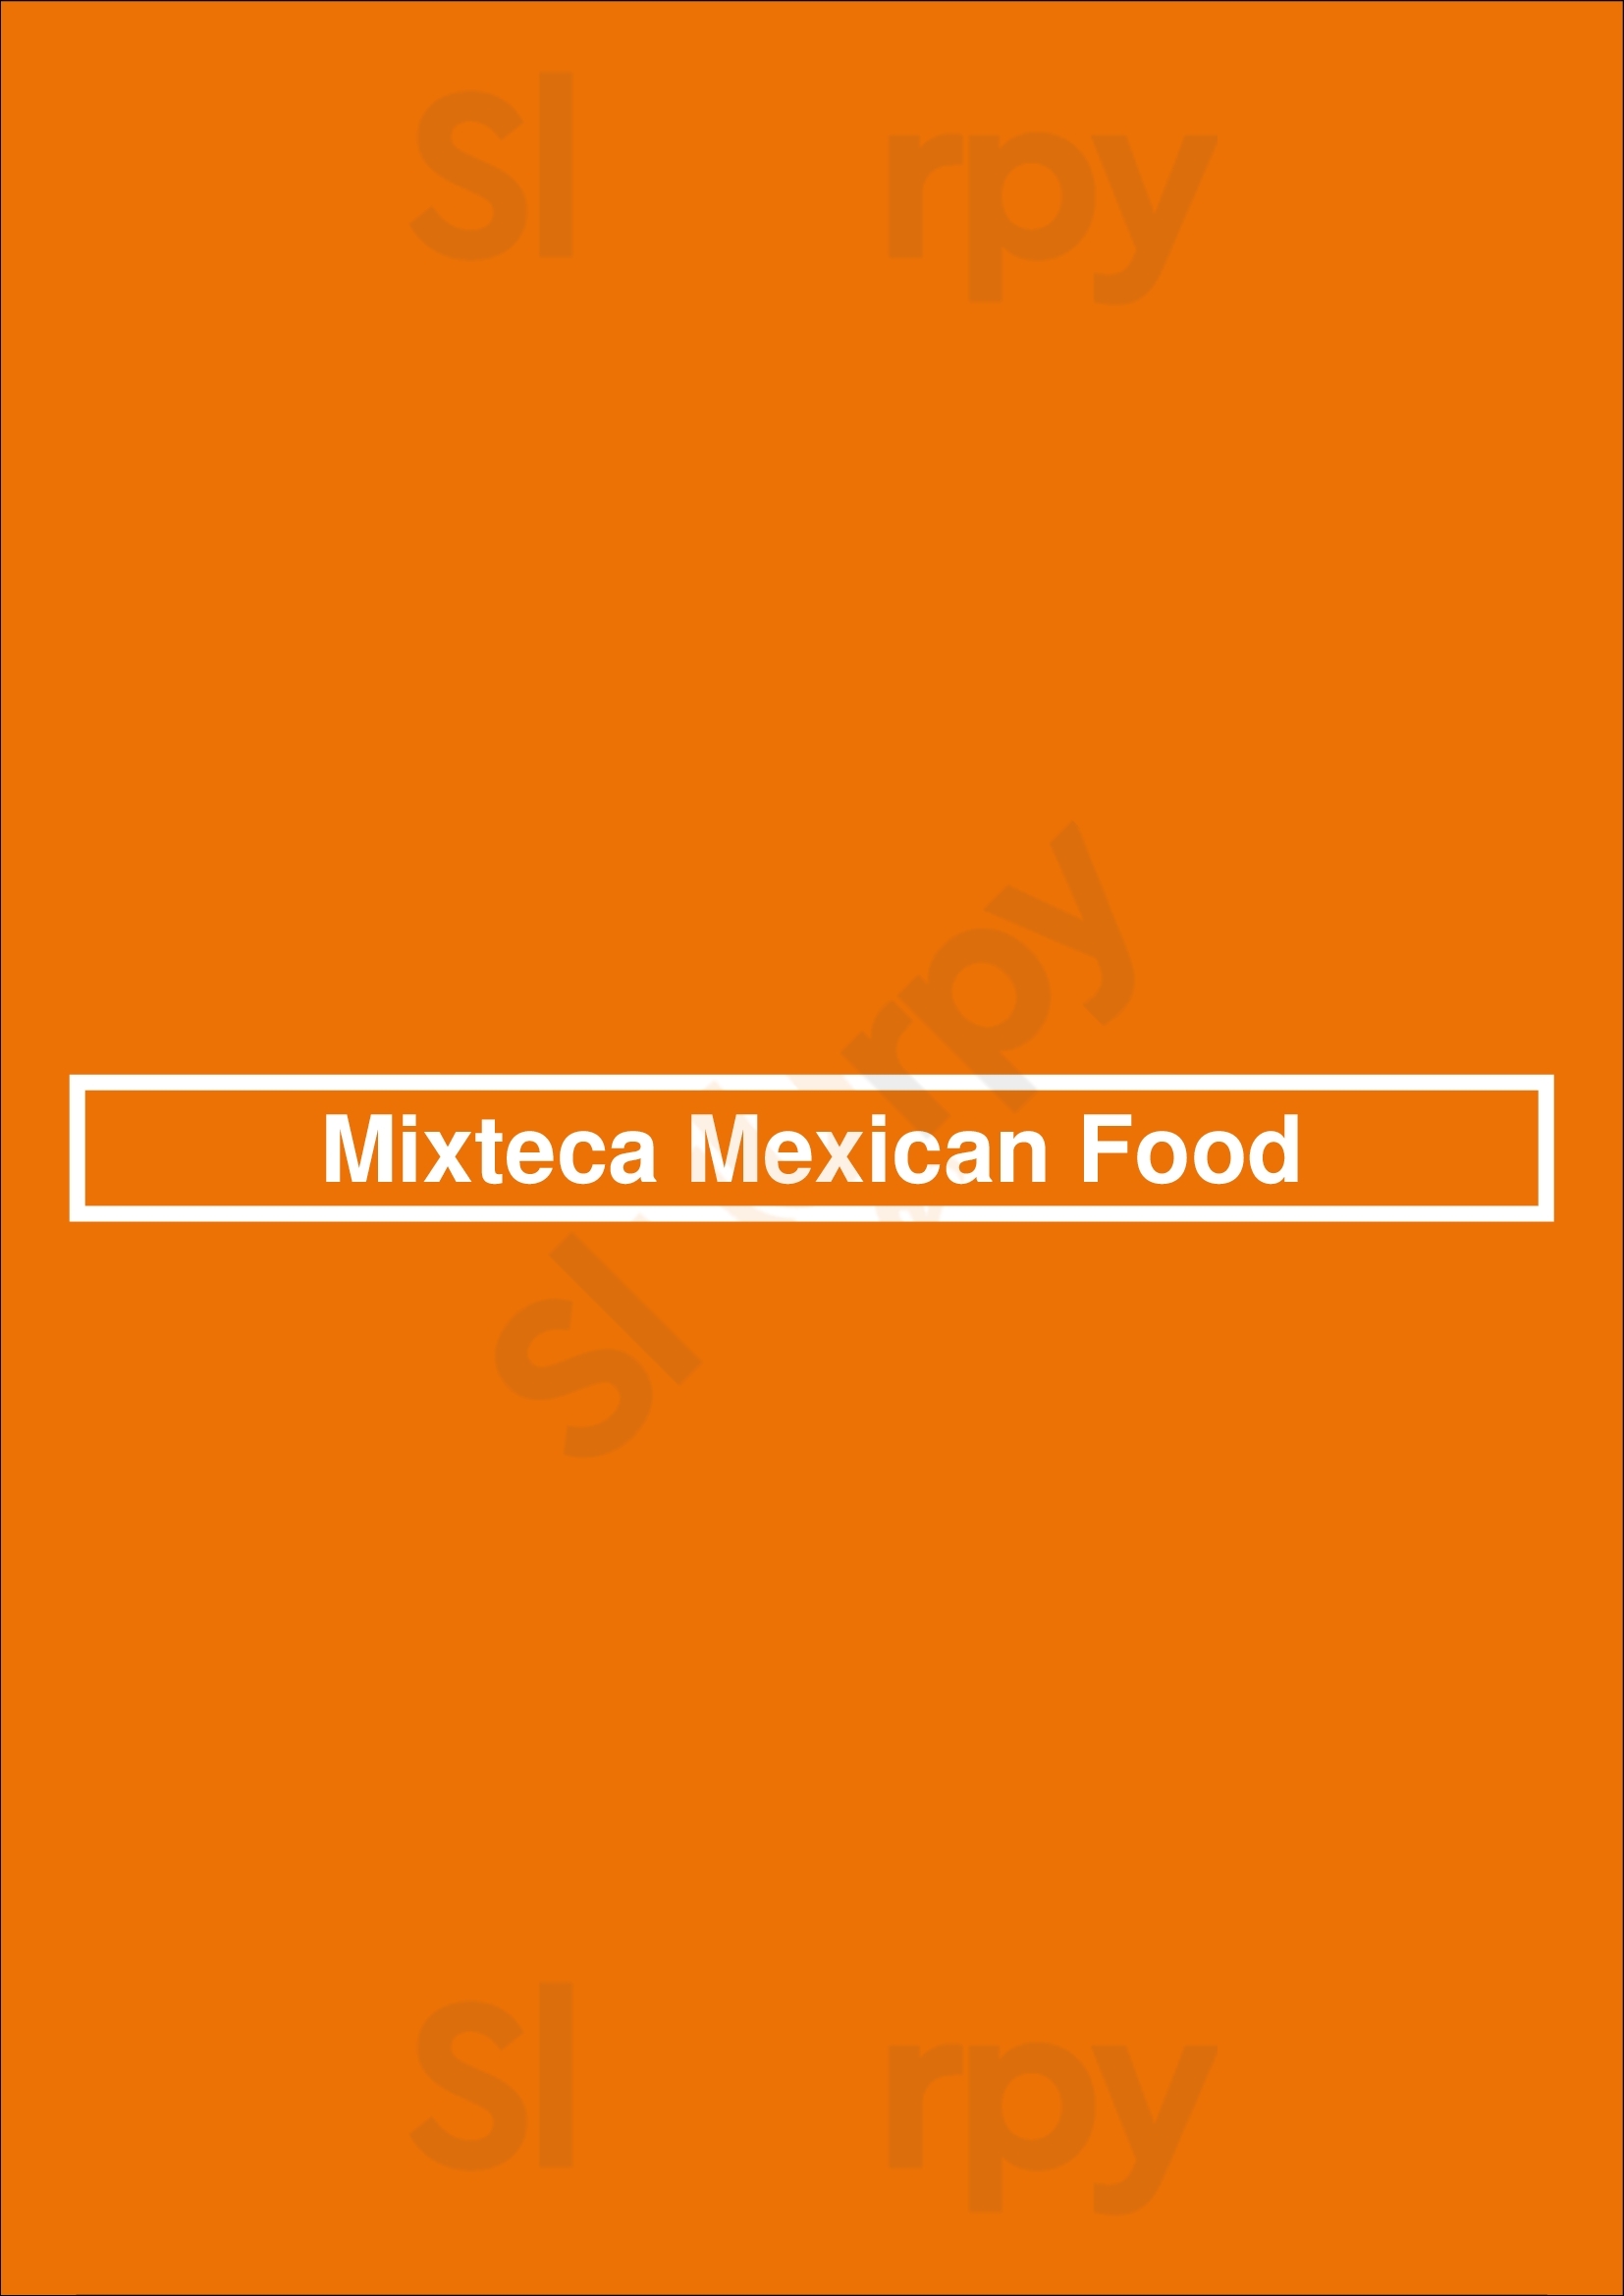 Mixteca Mexican Food Glendale Menu - 1